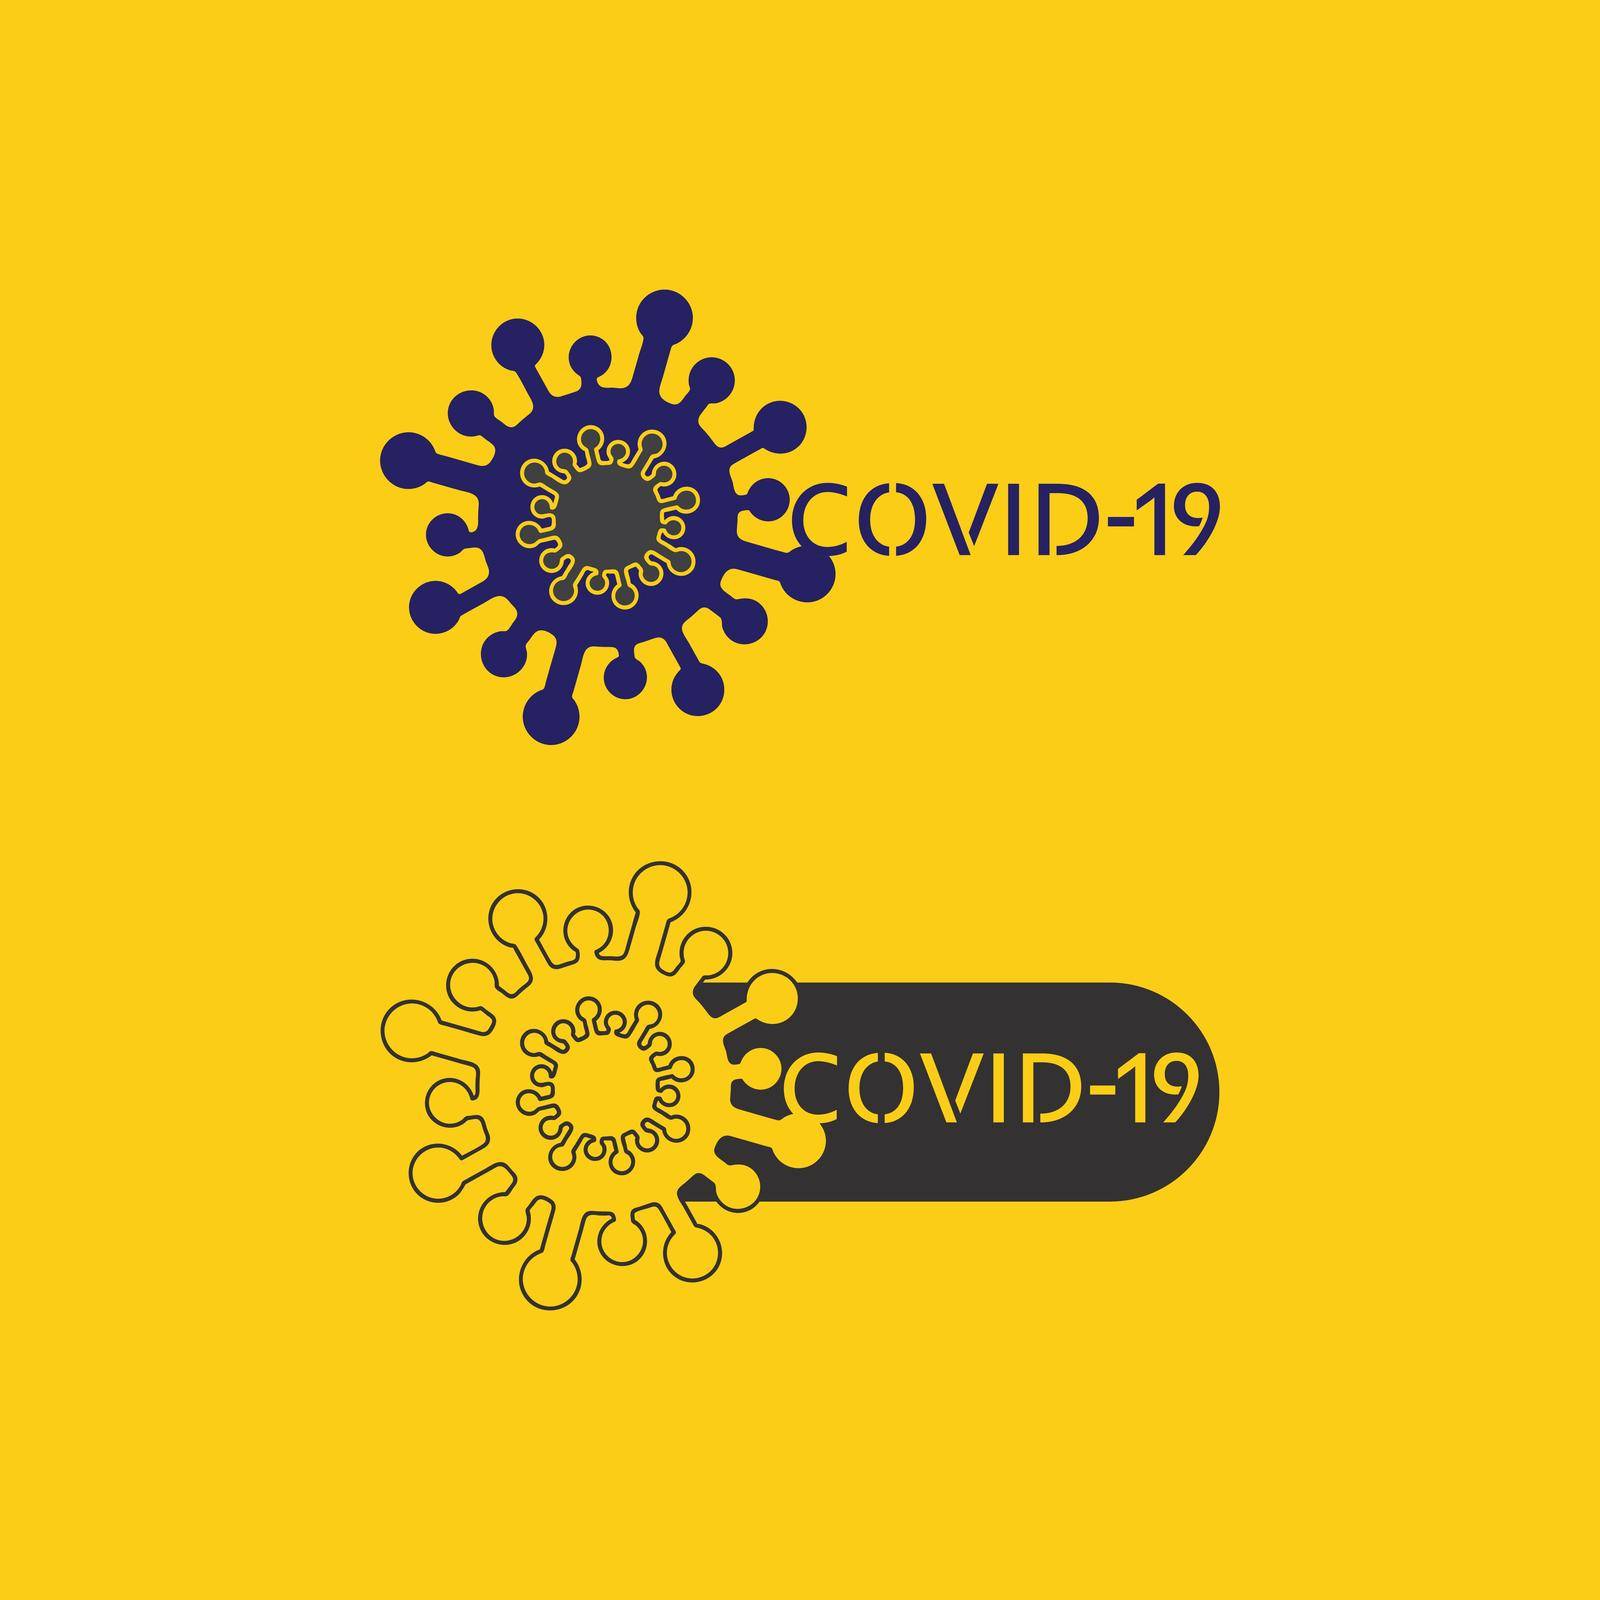 corona virus logo virus vector, vaccin logo,infection bacteria icon and health care danger social distancing pandemic covid 19 by Anggasaputro